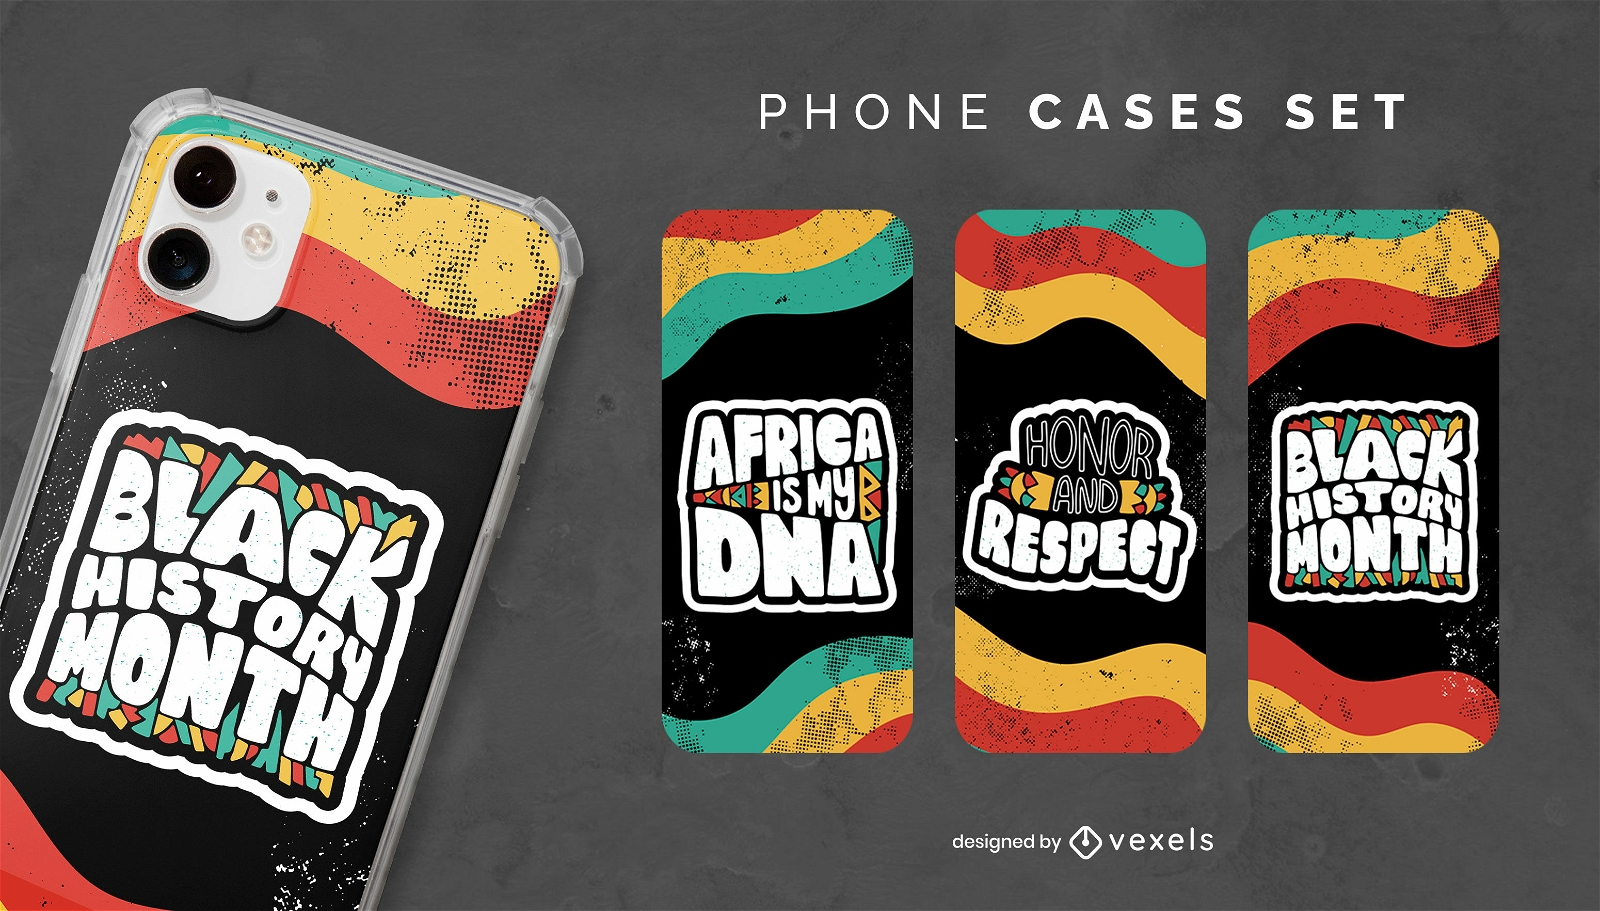 Africa history phone case set